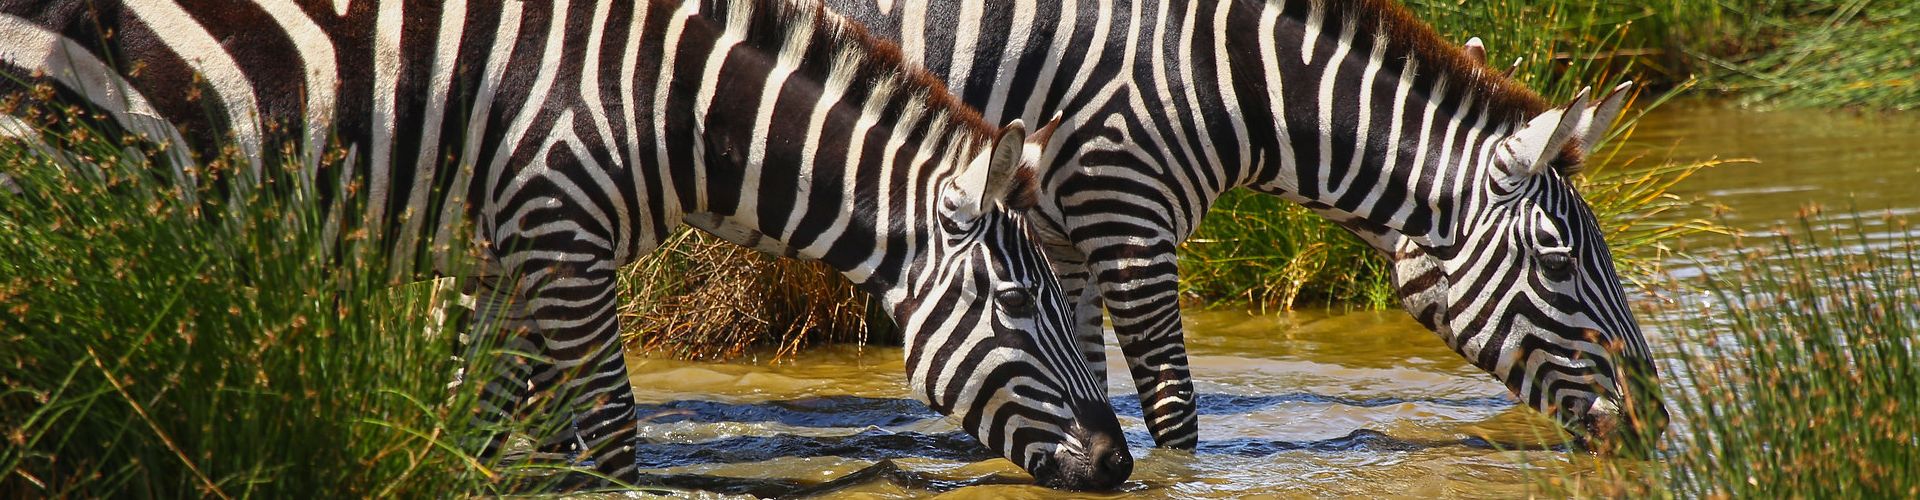 Zebras drinking from a small stream near Lake Manyara